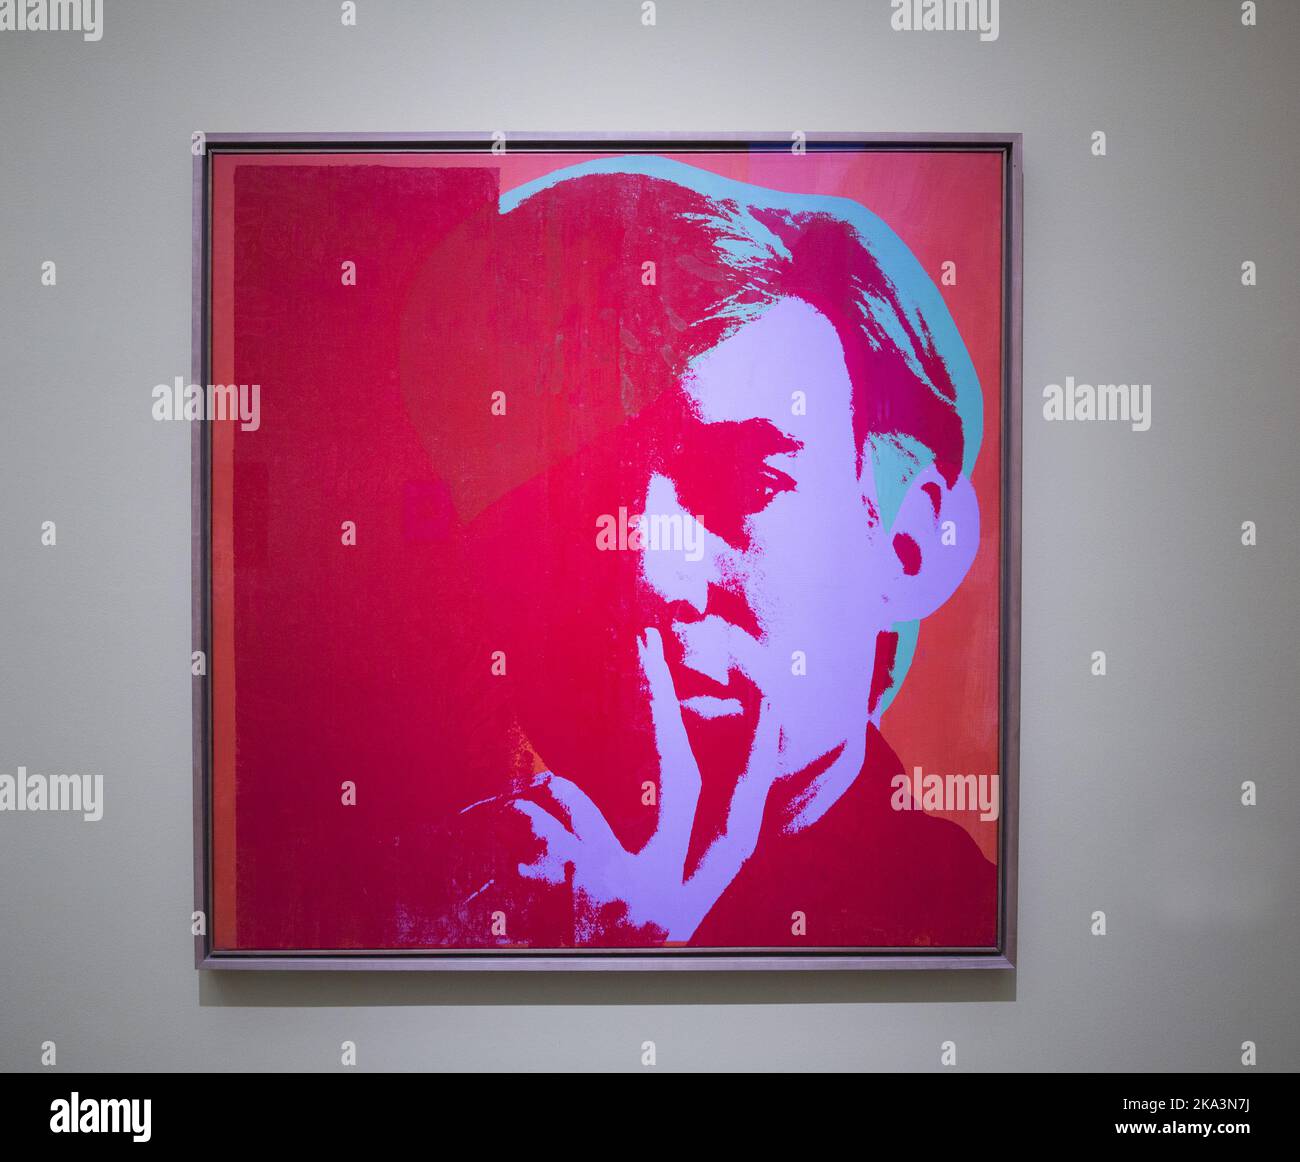 Andy Warhol self portrait Stock Photo